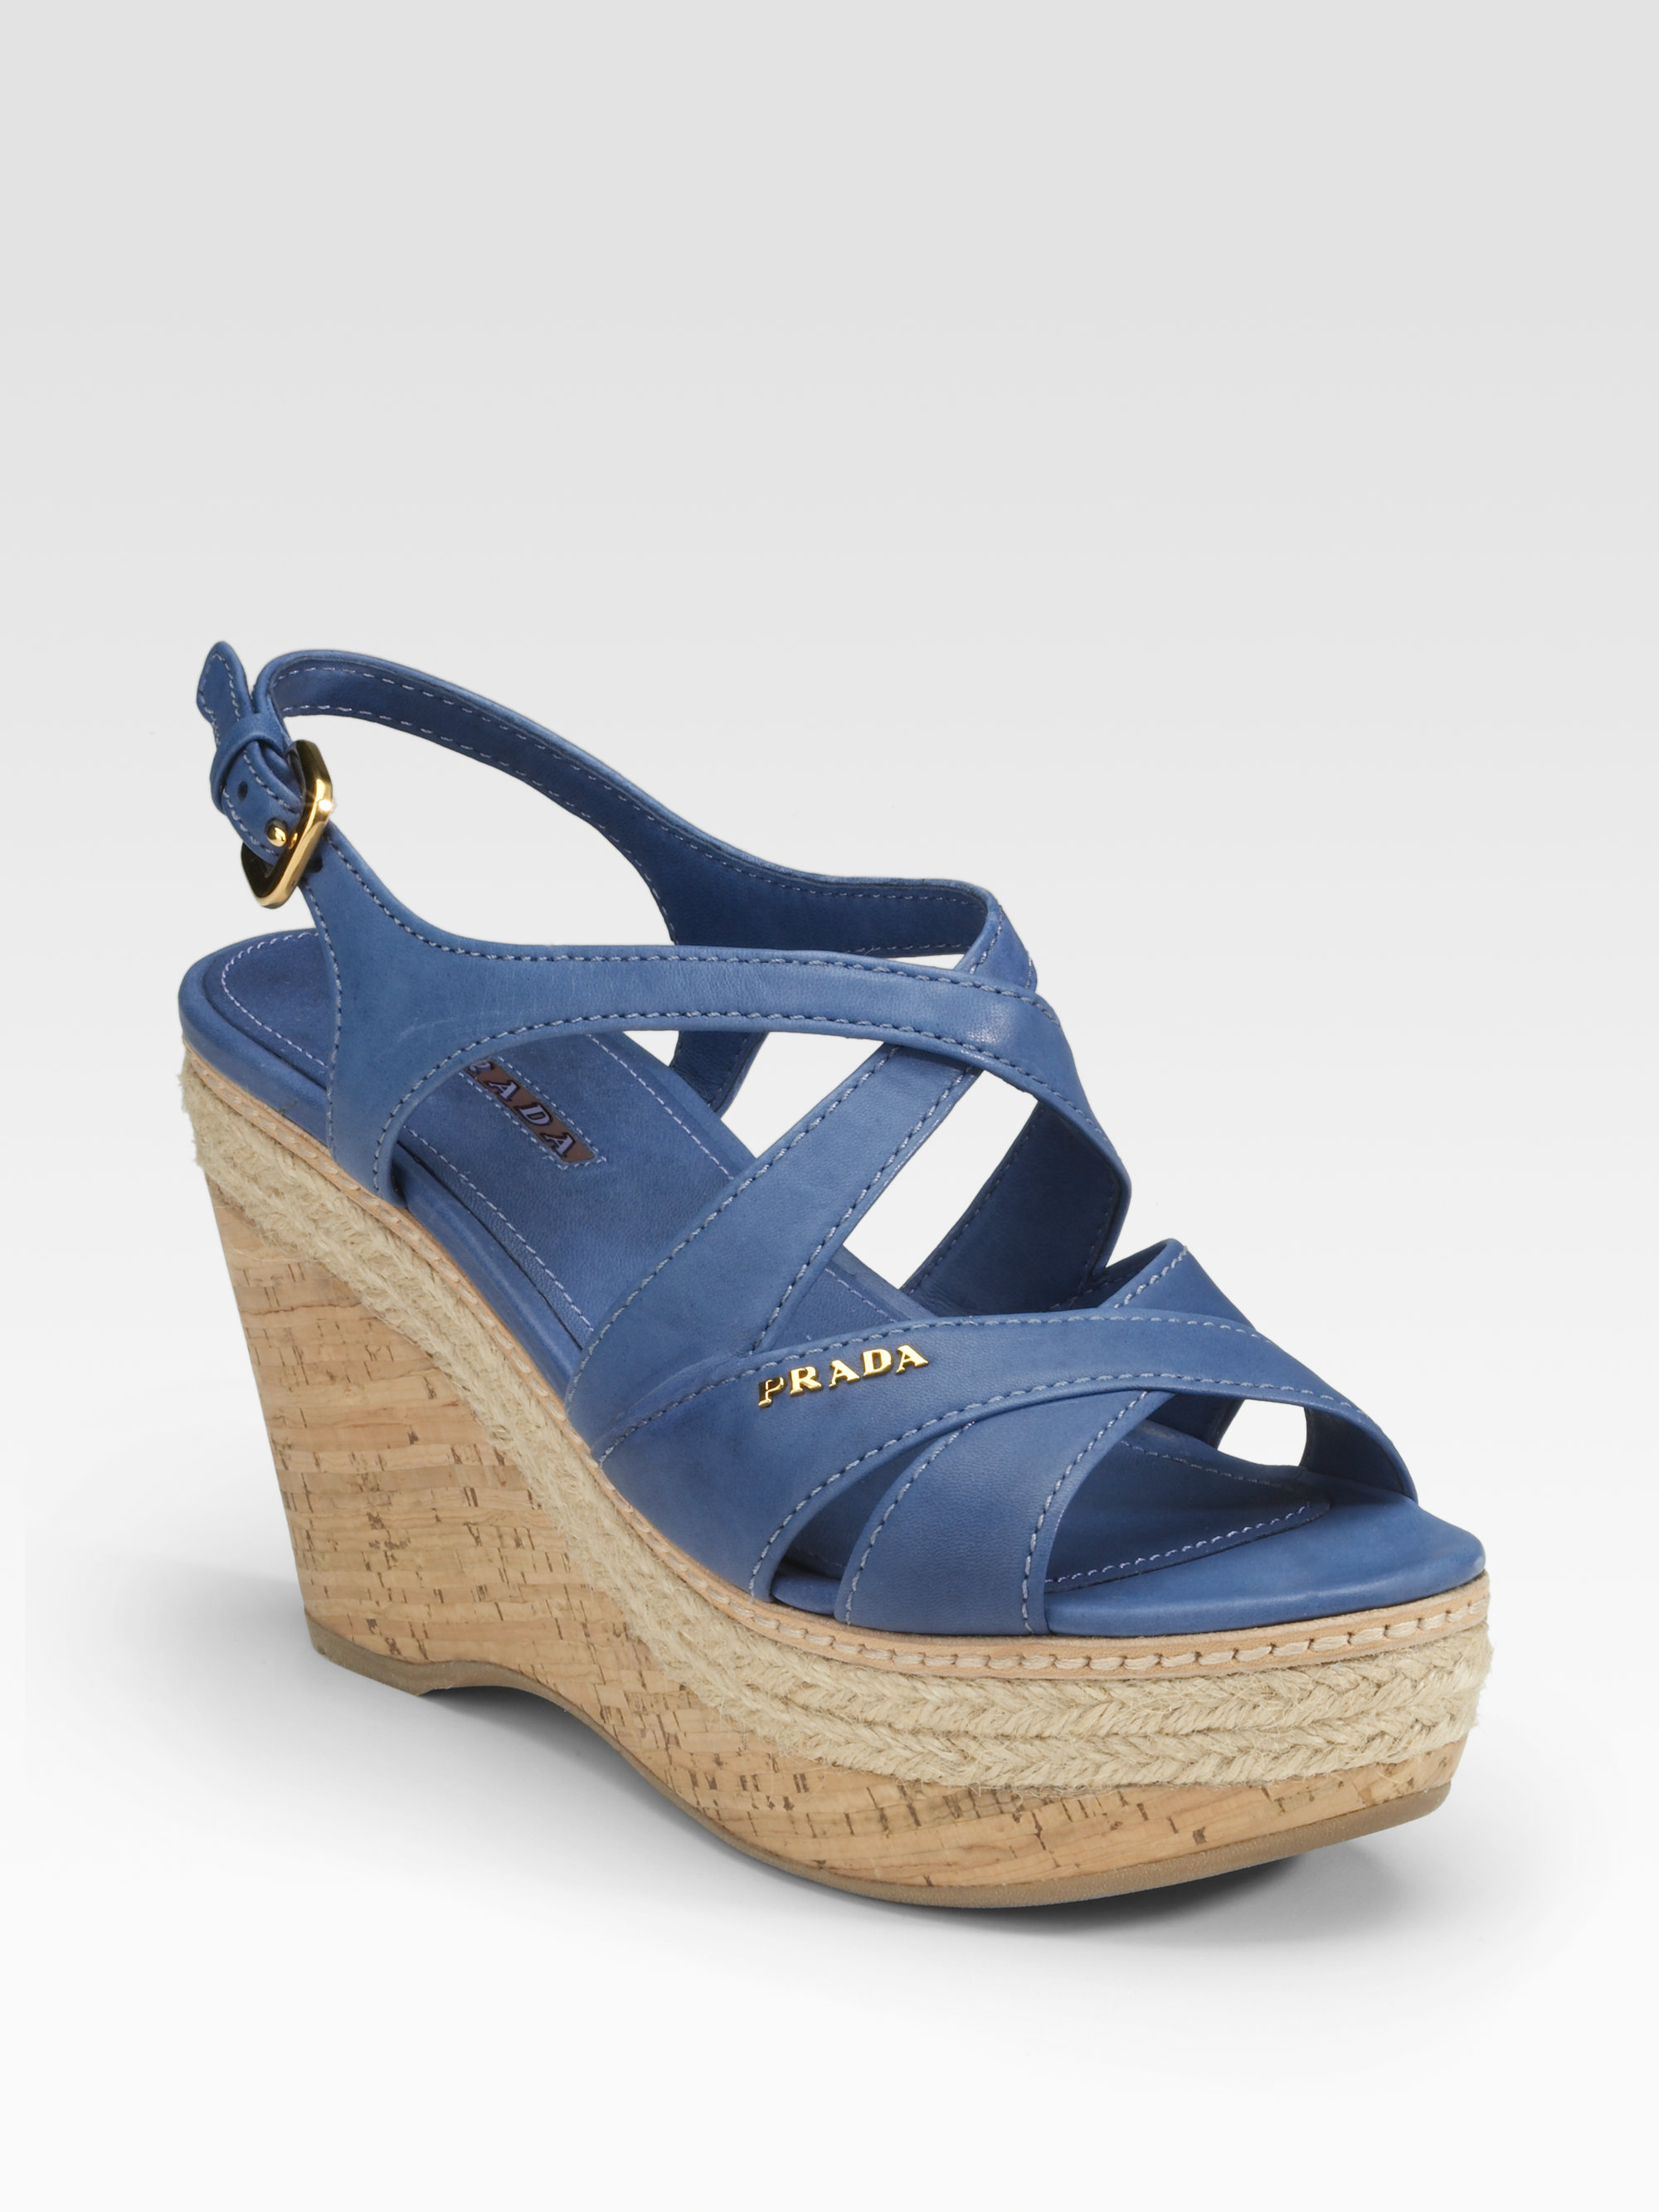 Prada Cork Wedge Sandals in Natural (Blue) - Lyst